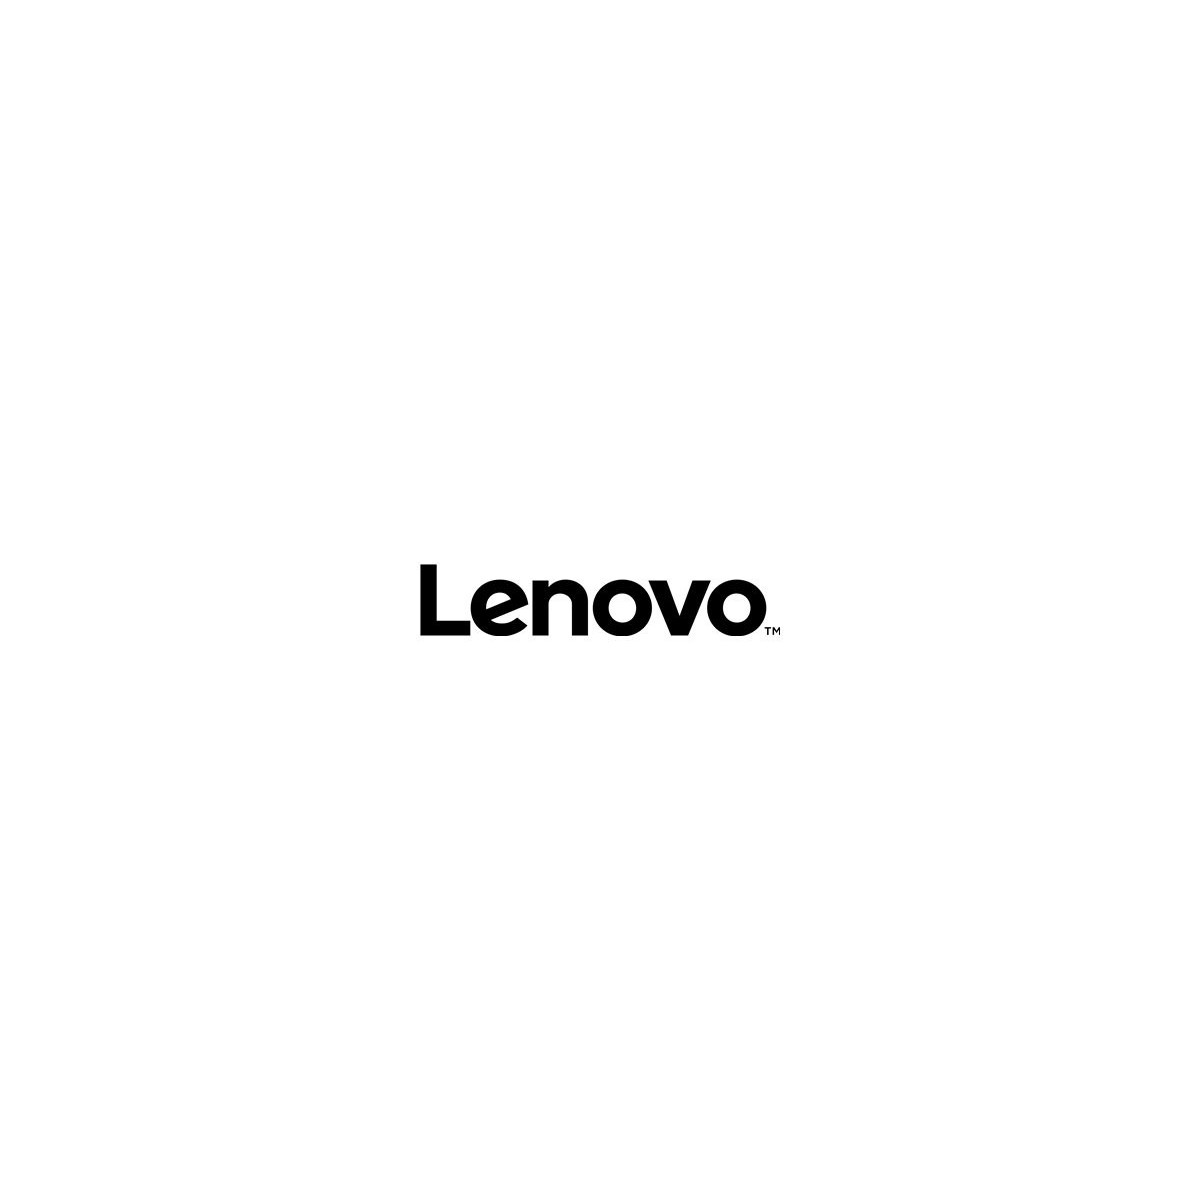 Lenovo SUSE Linux Enterprise Server with Live - Suse Linux